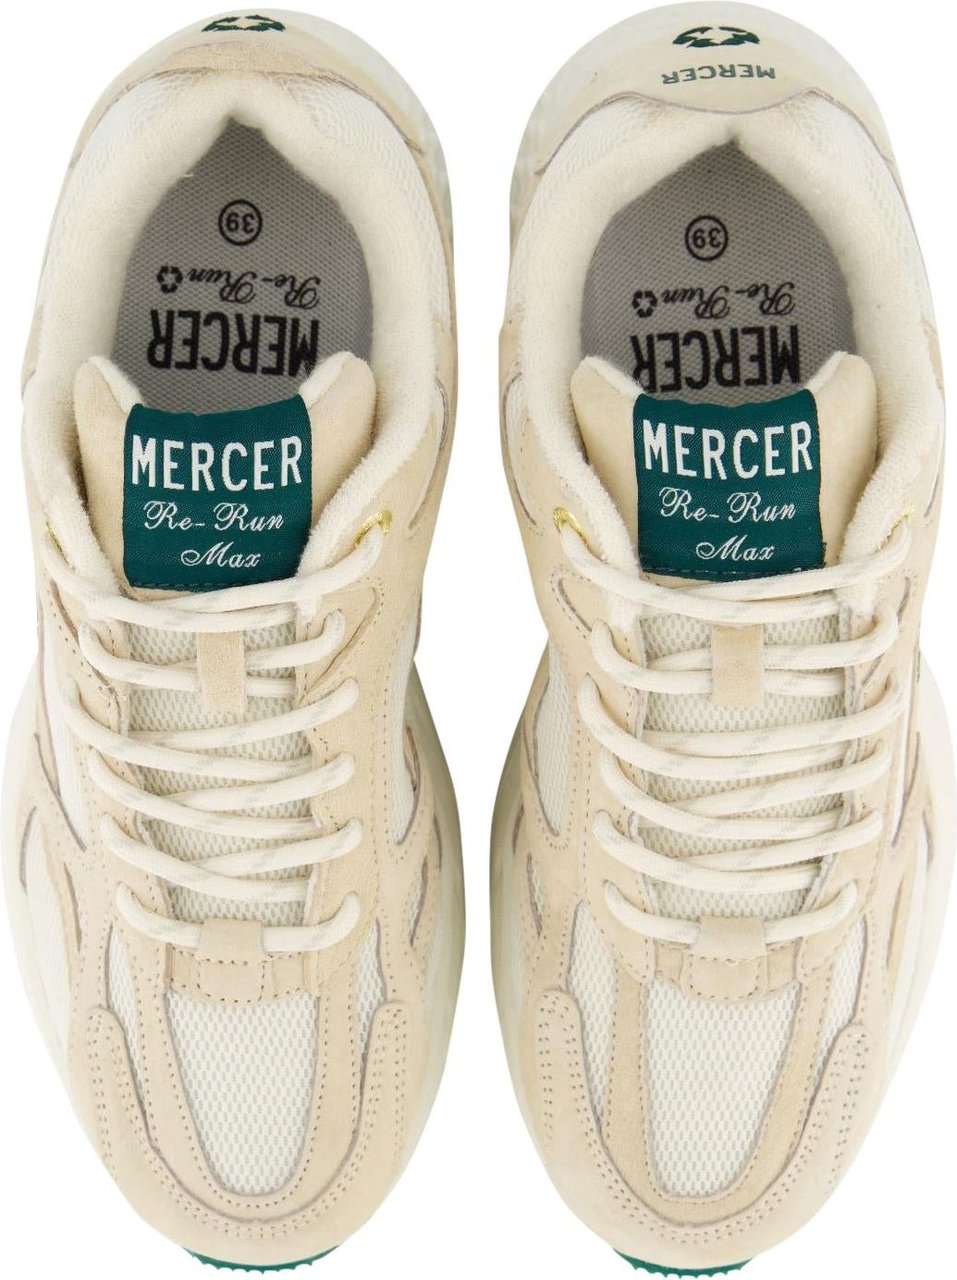 Mercer Amsterdam The Re-run Max Sneakers Grijs Me241006 Grijs